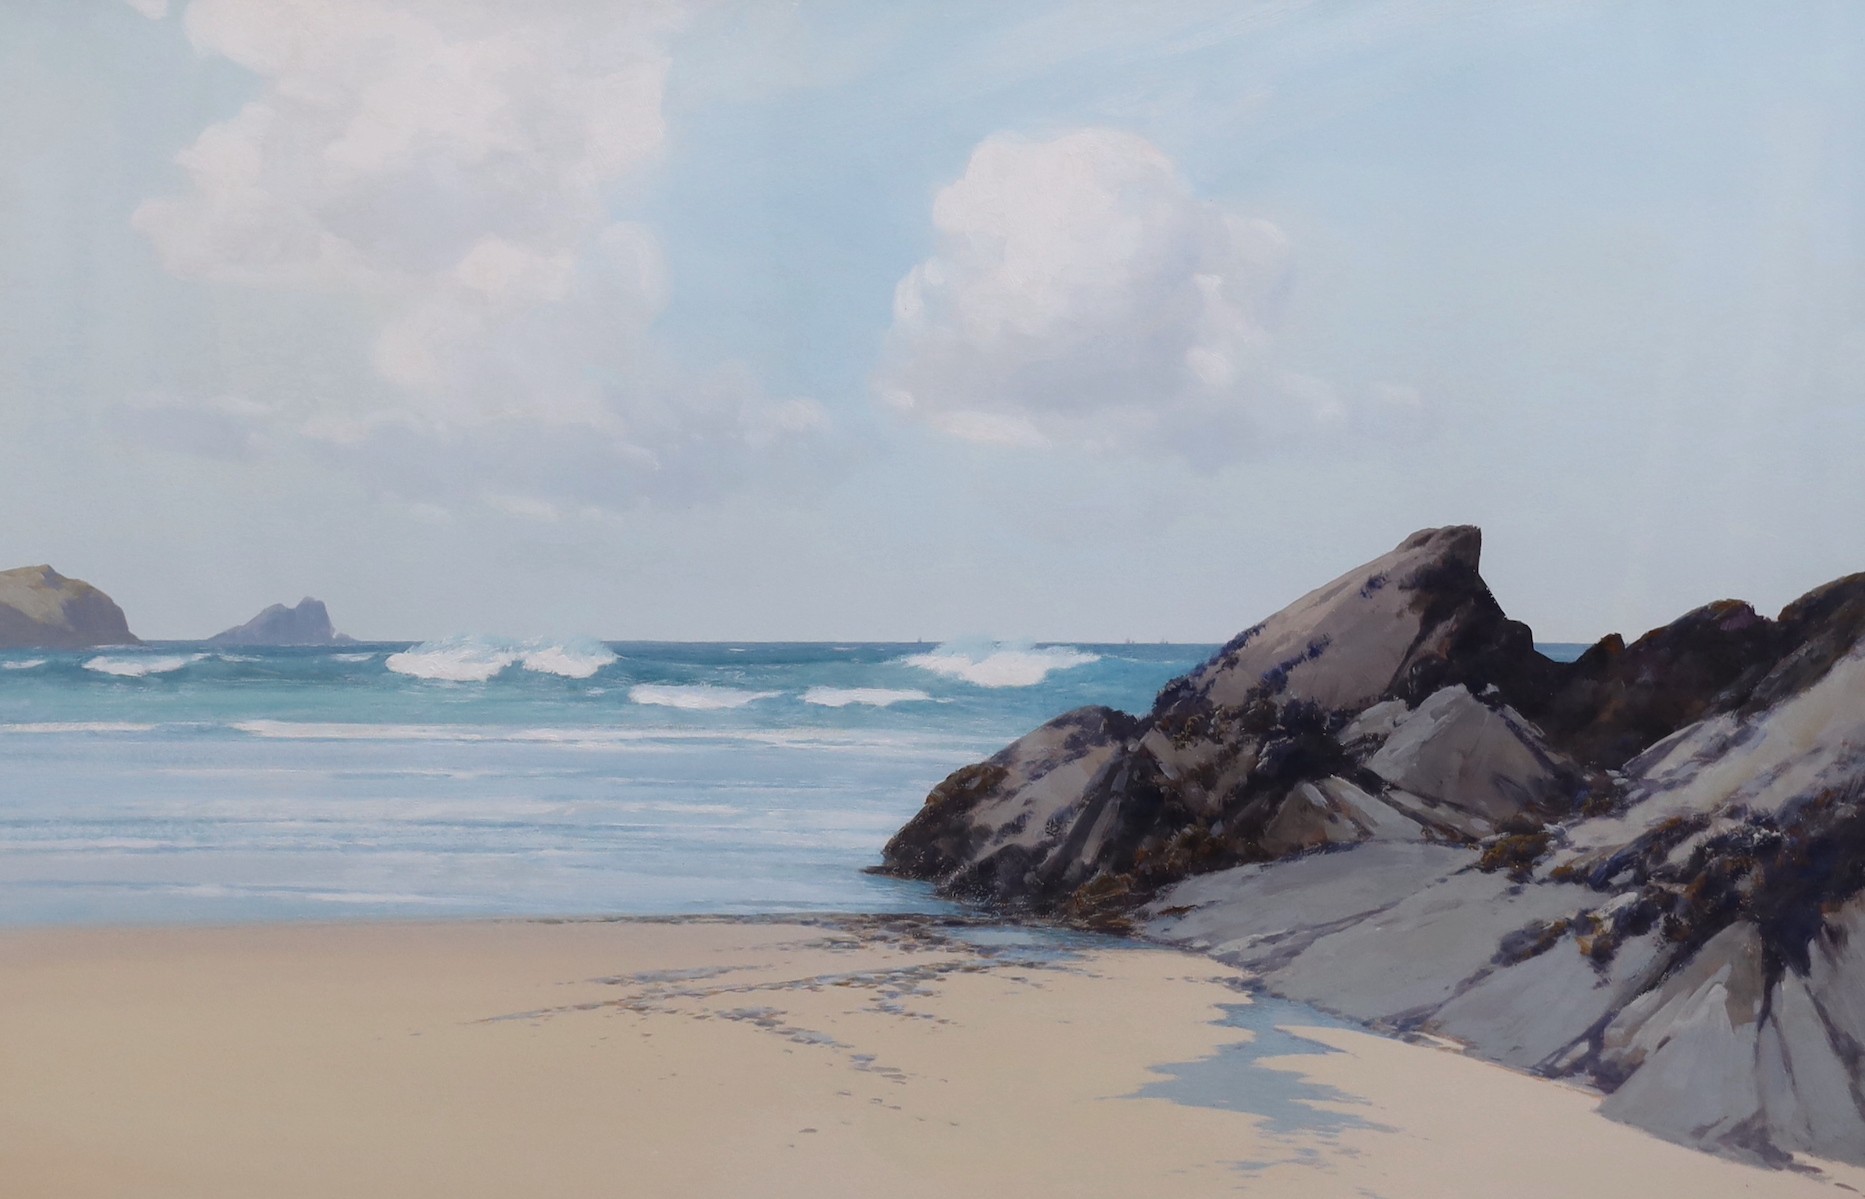 Frederick John Widgery (British, 1861-1942), 'Town Beach, Newquay' and 'Cornish beach scene', pair of gouaches on paper, 59 x 90cm